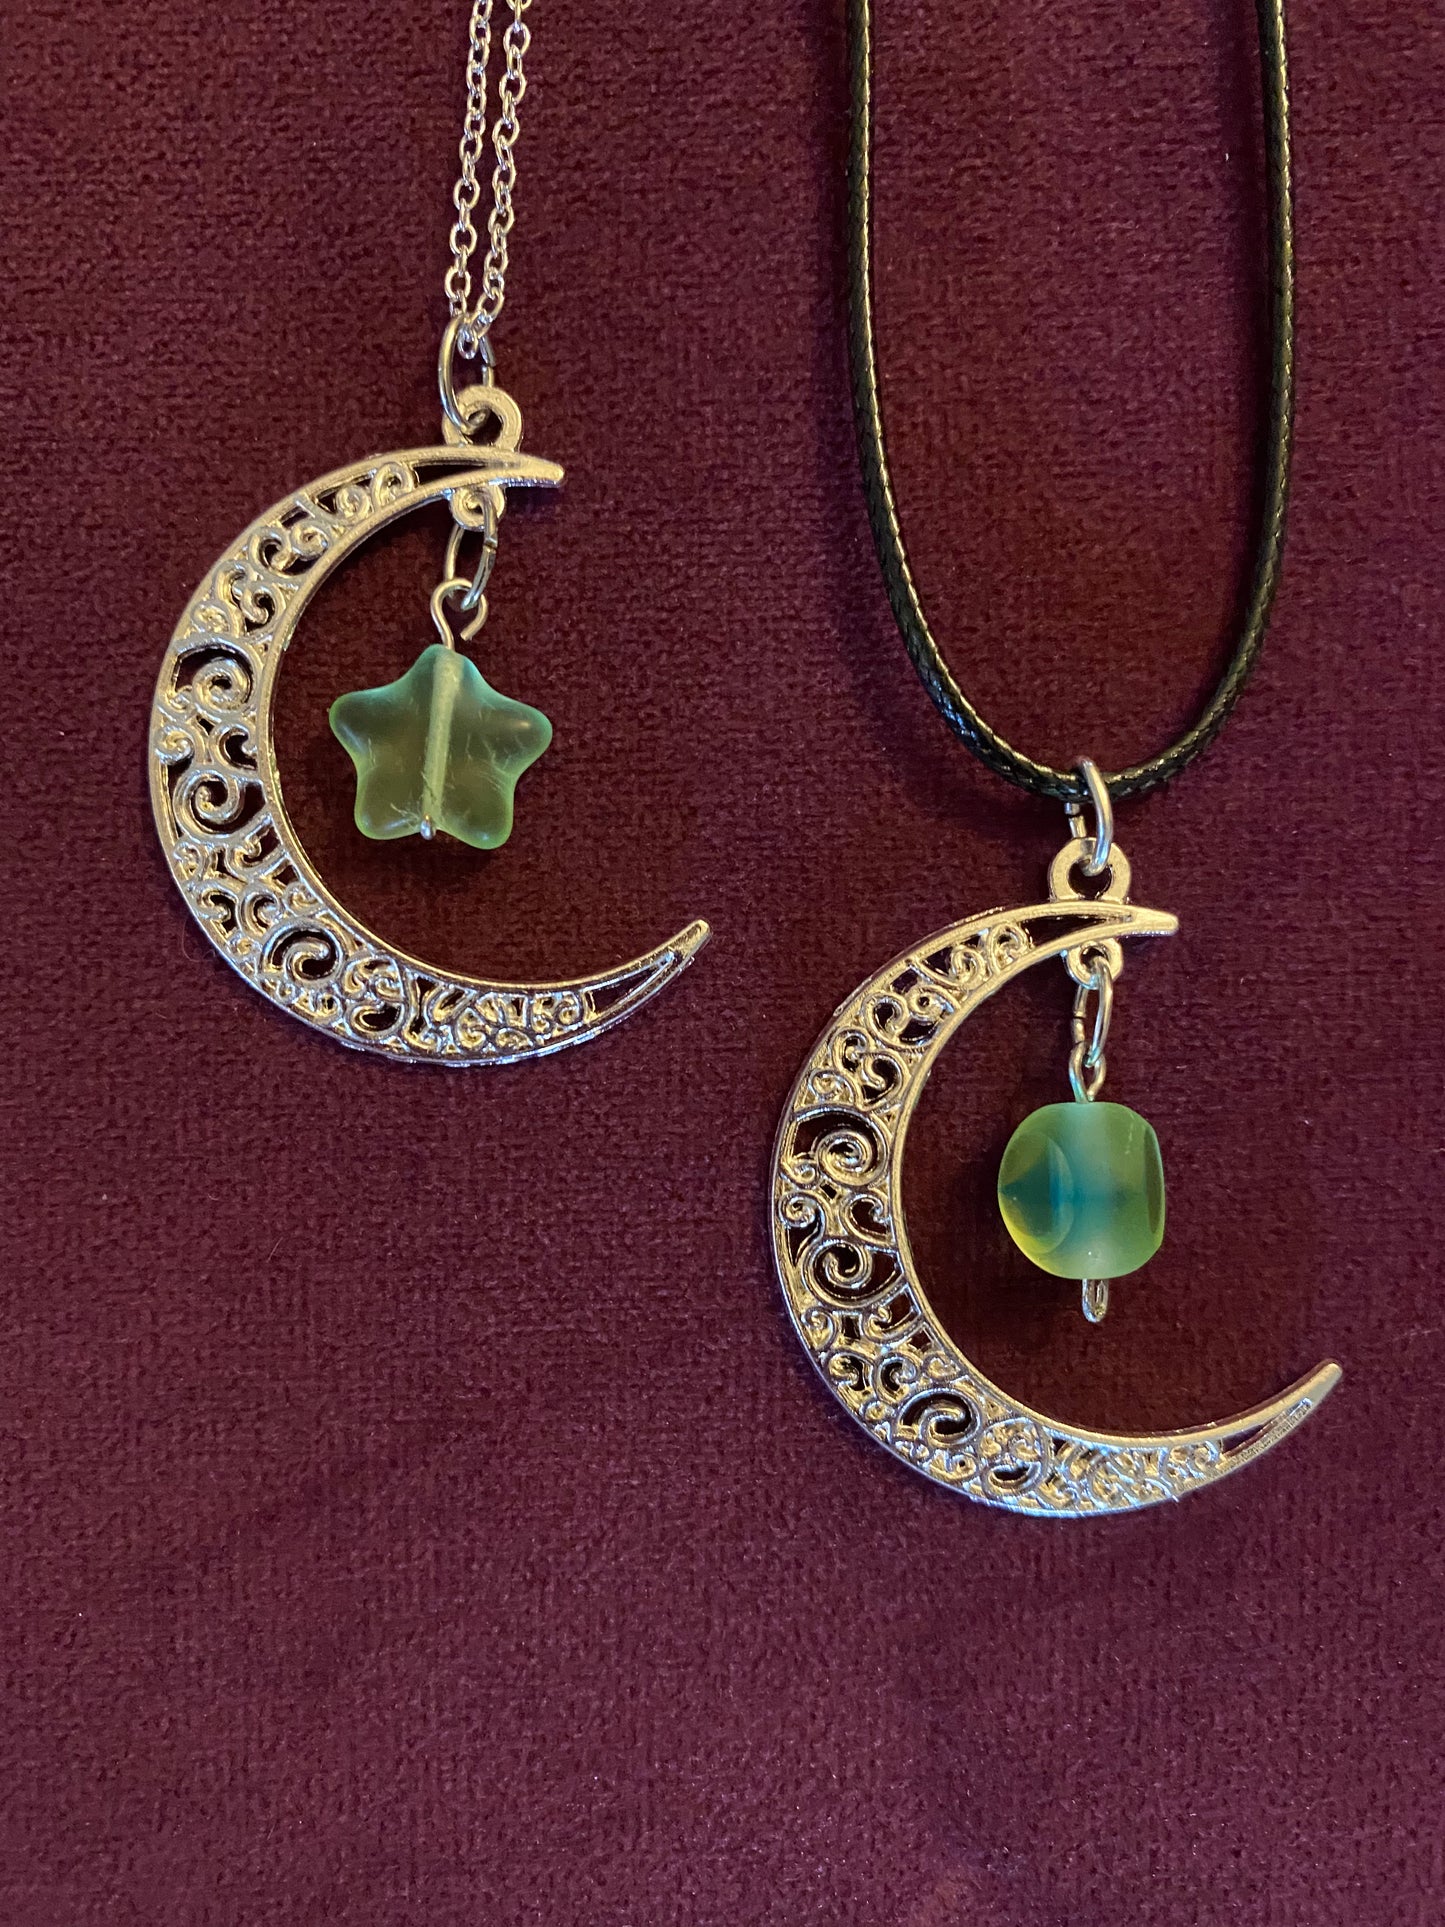 Uranium glass moon necklaces